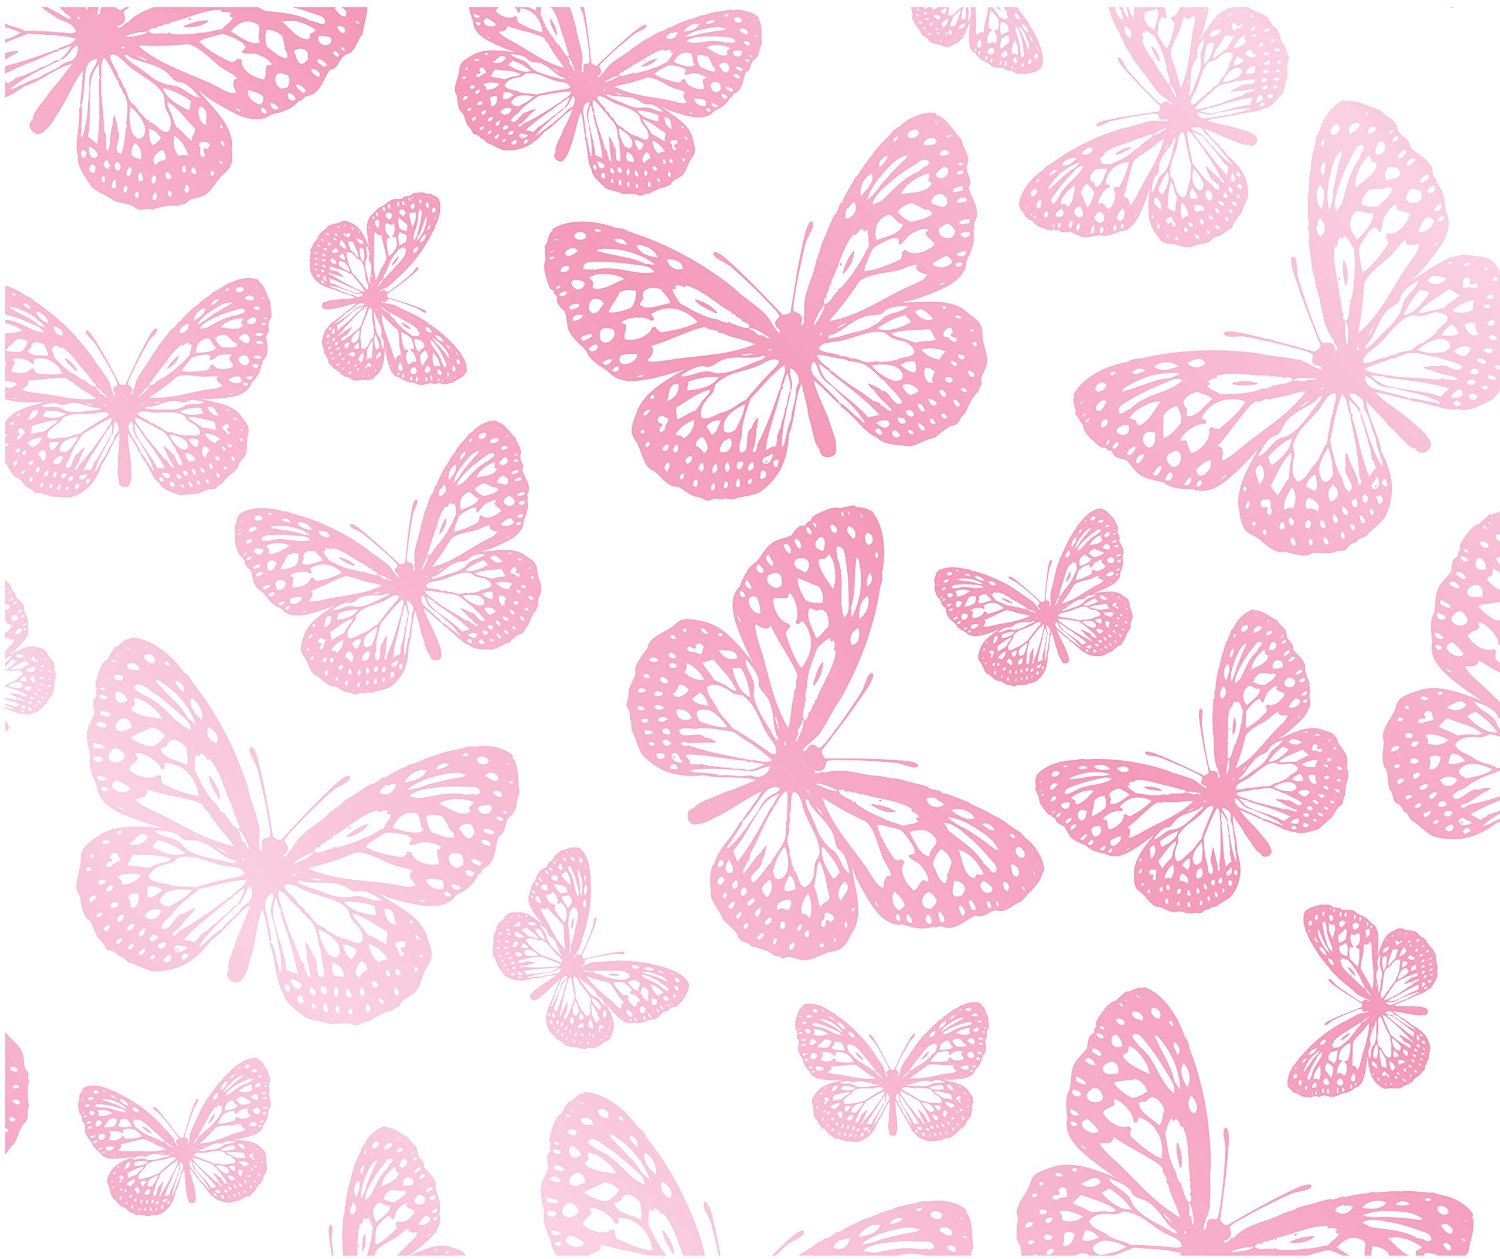 Fun4walls Butterflies Wallpaper, White/ Pink: Amazon.co.uk ...